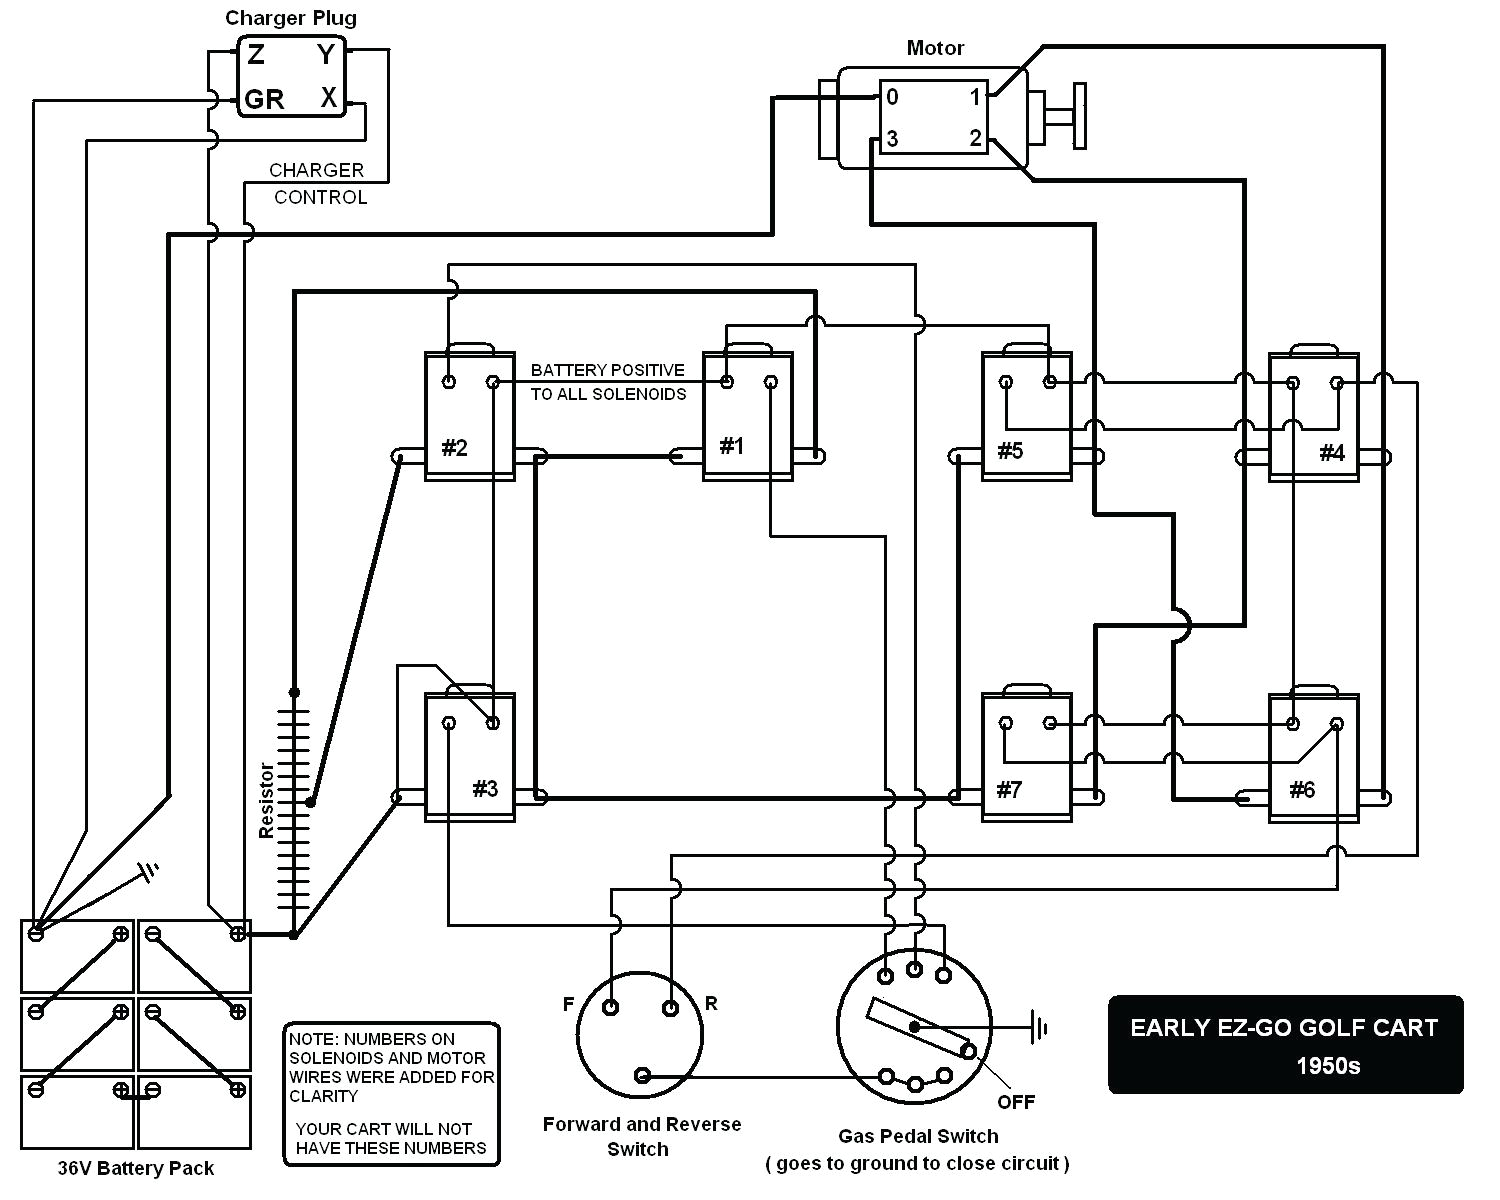 36 volt battery wiring diagram forward reverse wiring diagram review 36 volt western golf cart wiring